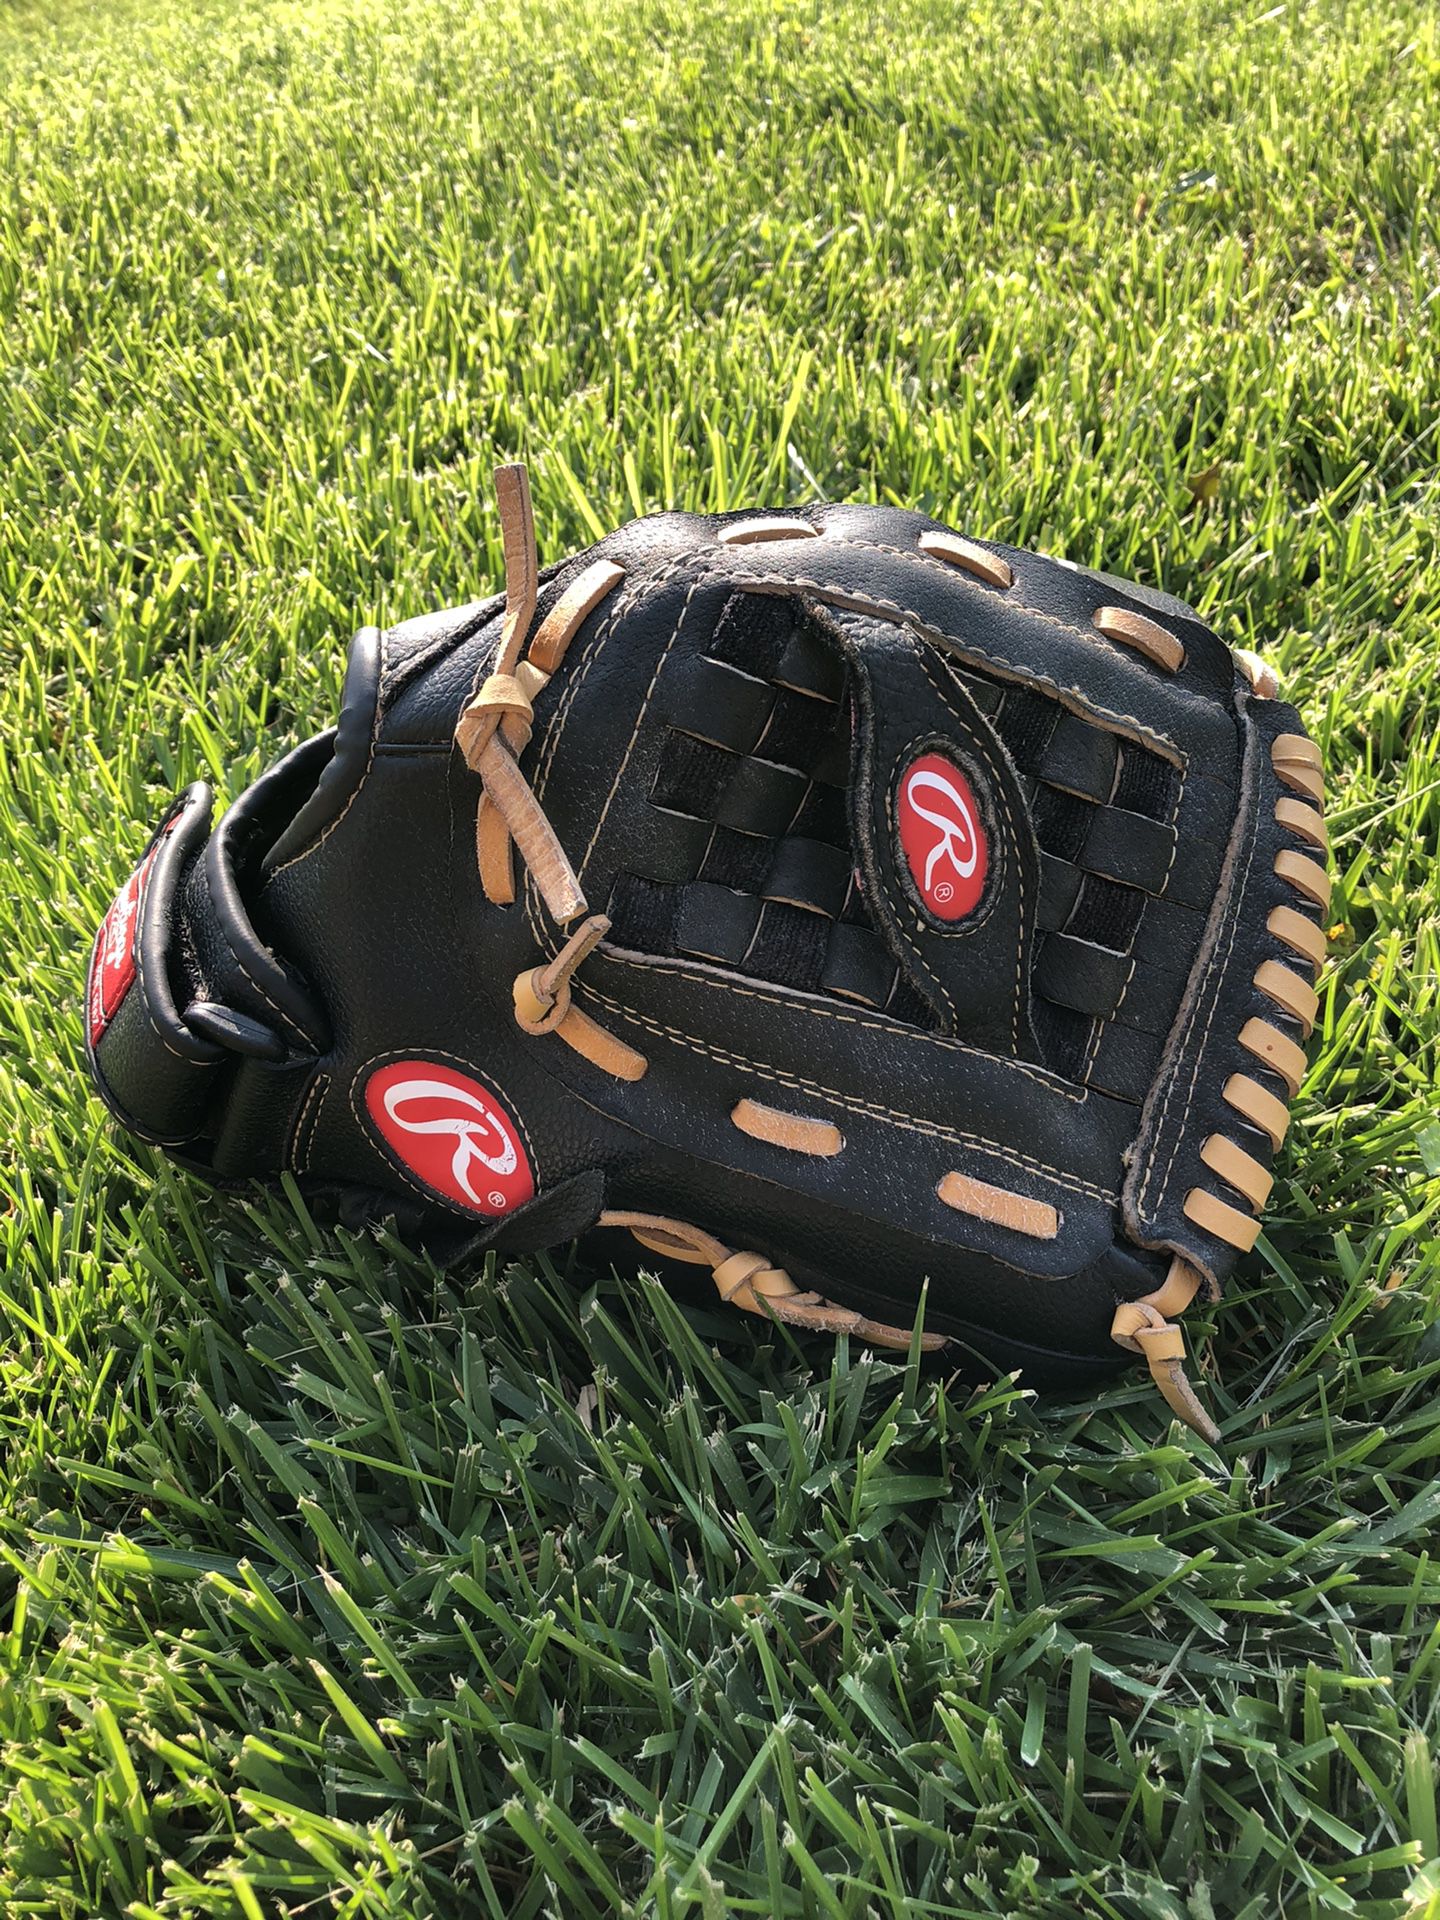 Rawlings 12 1/2” softball glove.